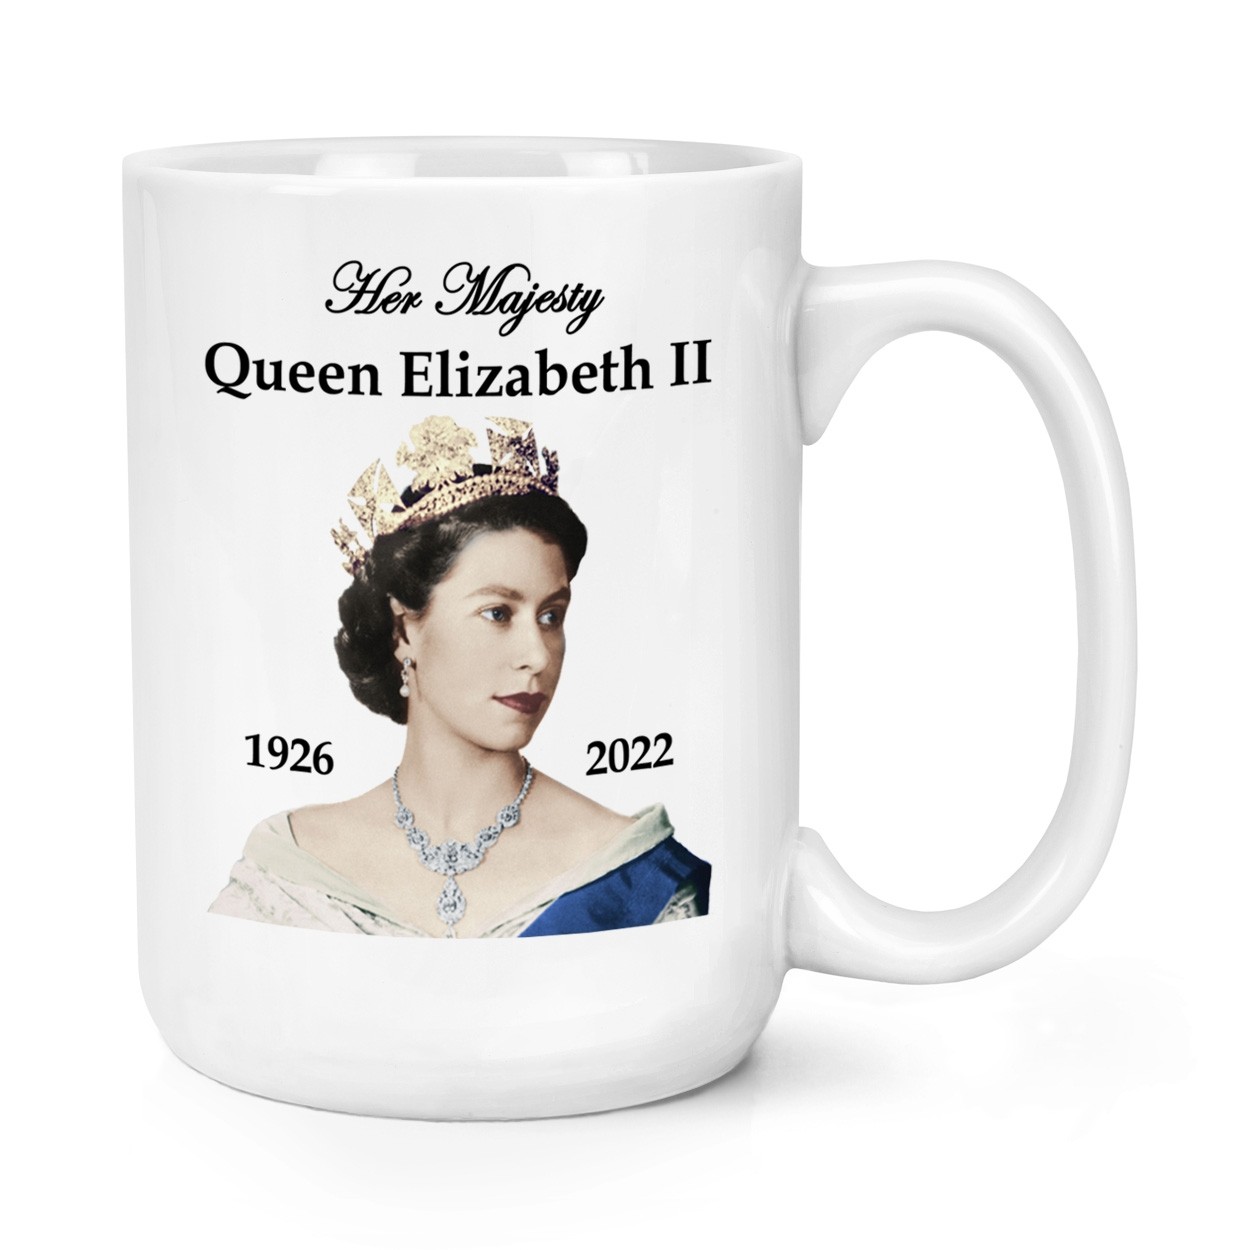 Her Majesty Queen Elizabeth II 1926 - 2022 15oz Large Mug Cup Commemorative Gift Ma'am 